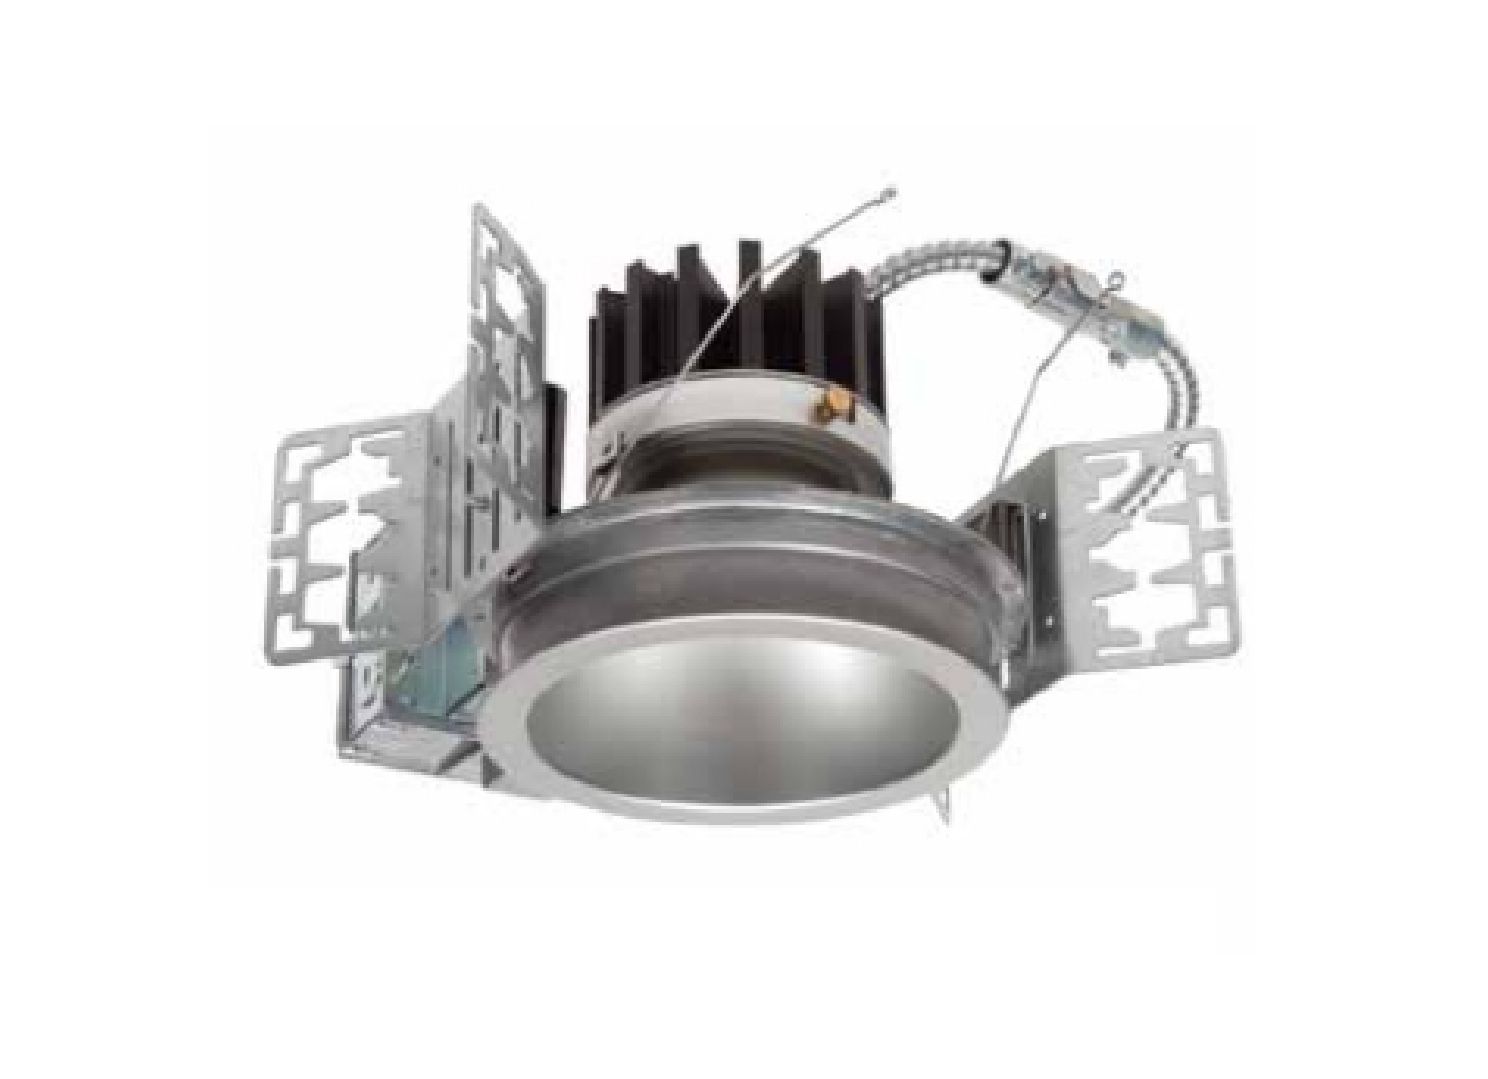 Details about   Eaton Portfolio Cooper Lighting 6LW0LI Lensed Trim Assembly White  6”Series LD6A 